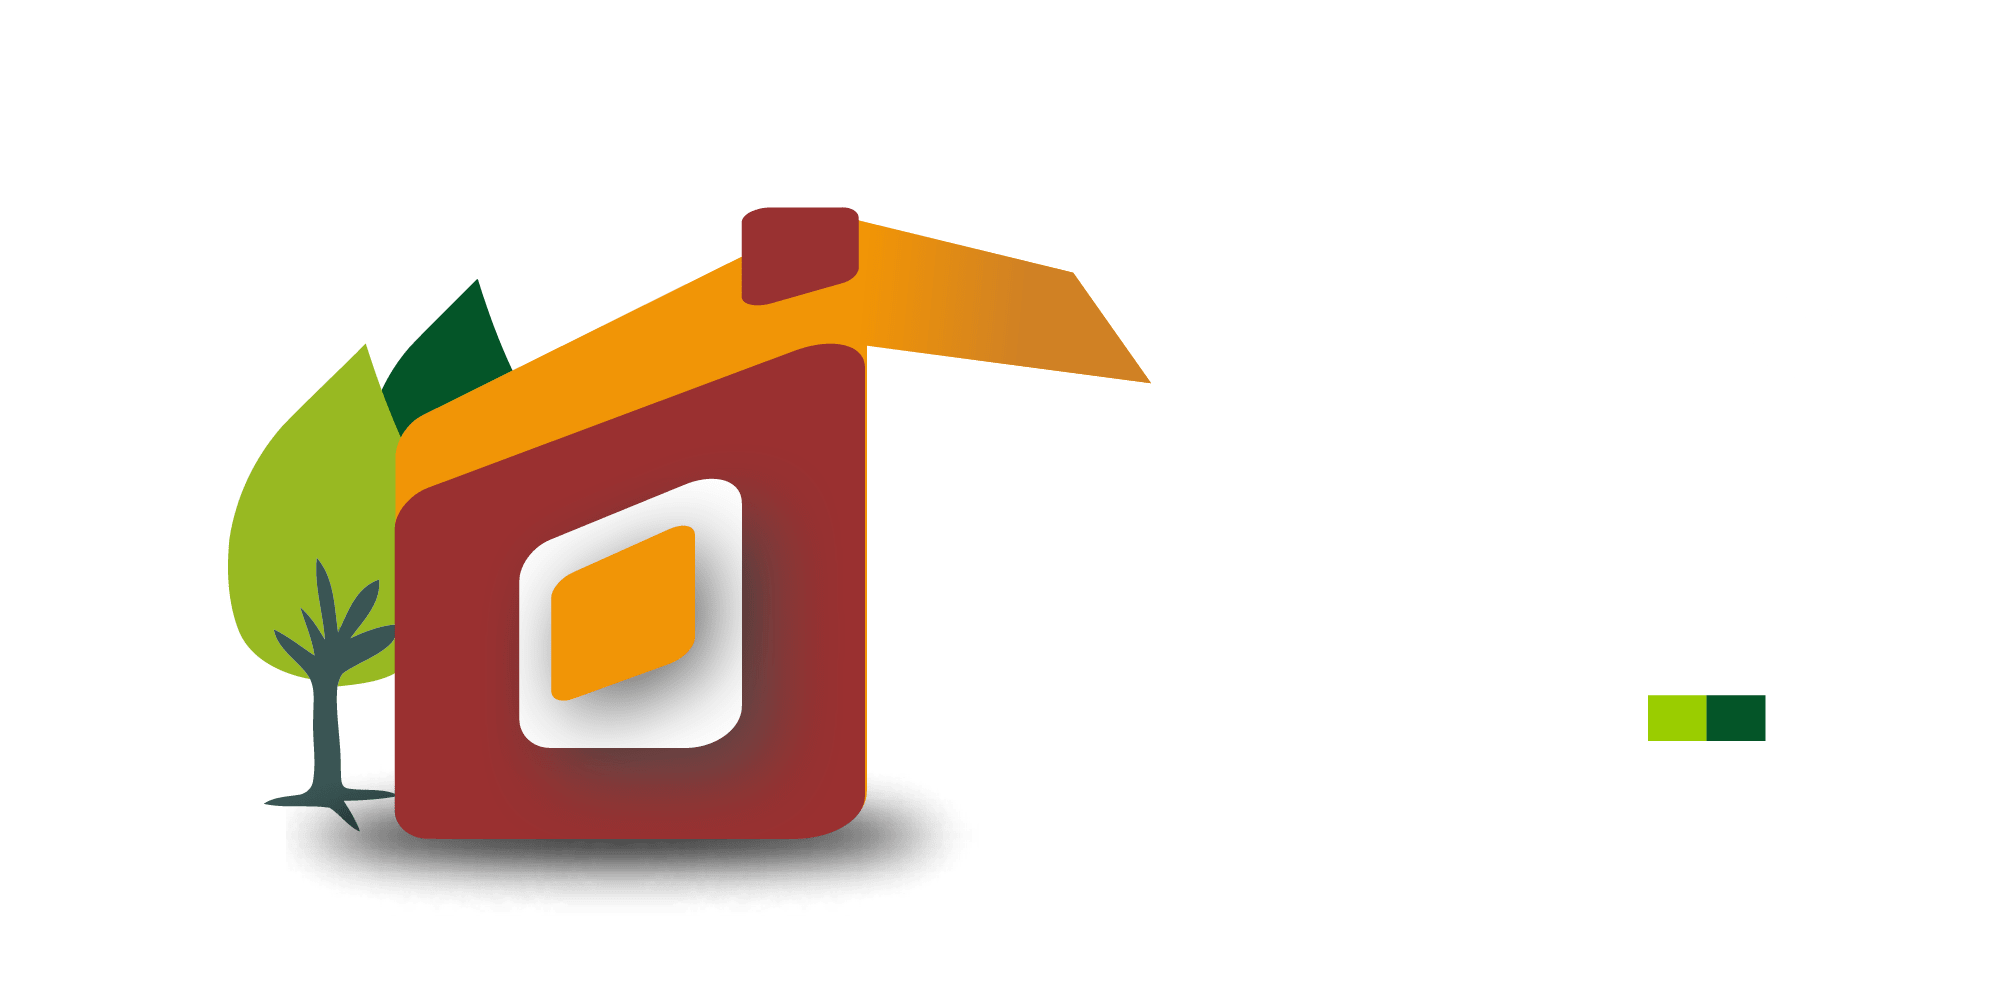 KYSGO Life & Business